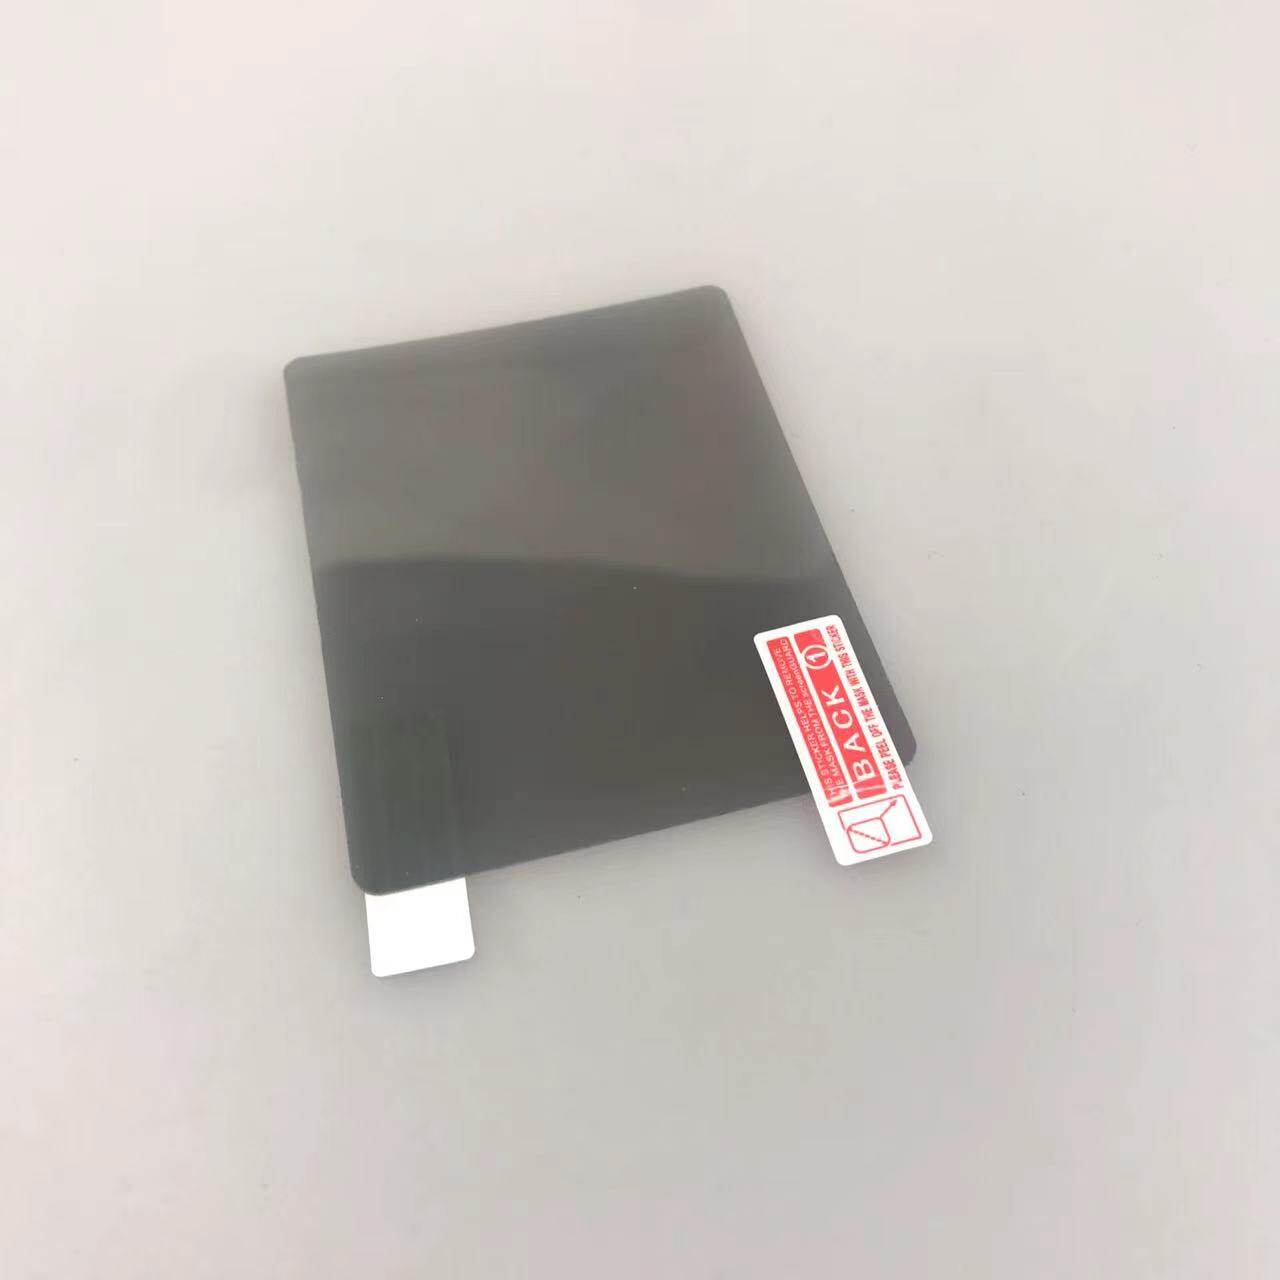 Komatsu excavator parts Komatsu-7 LCD sheet sticker sticker